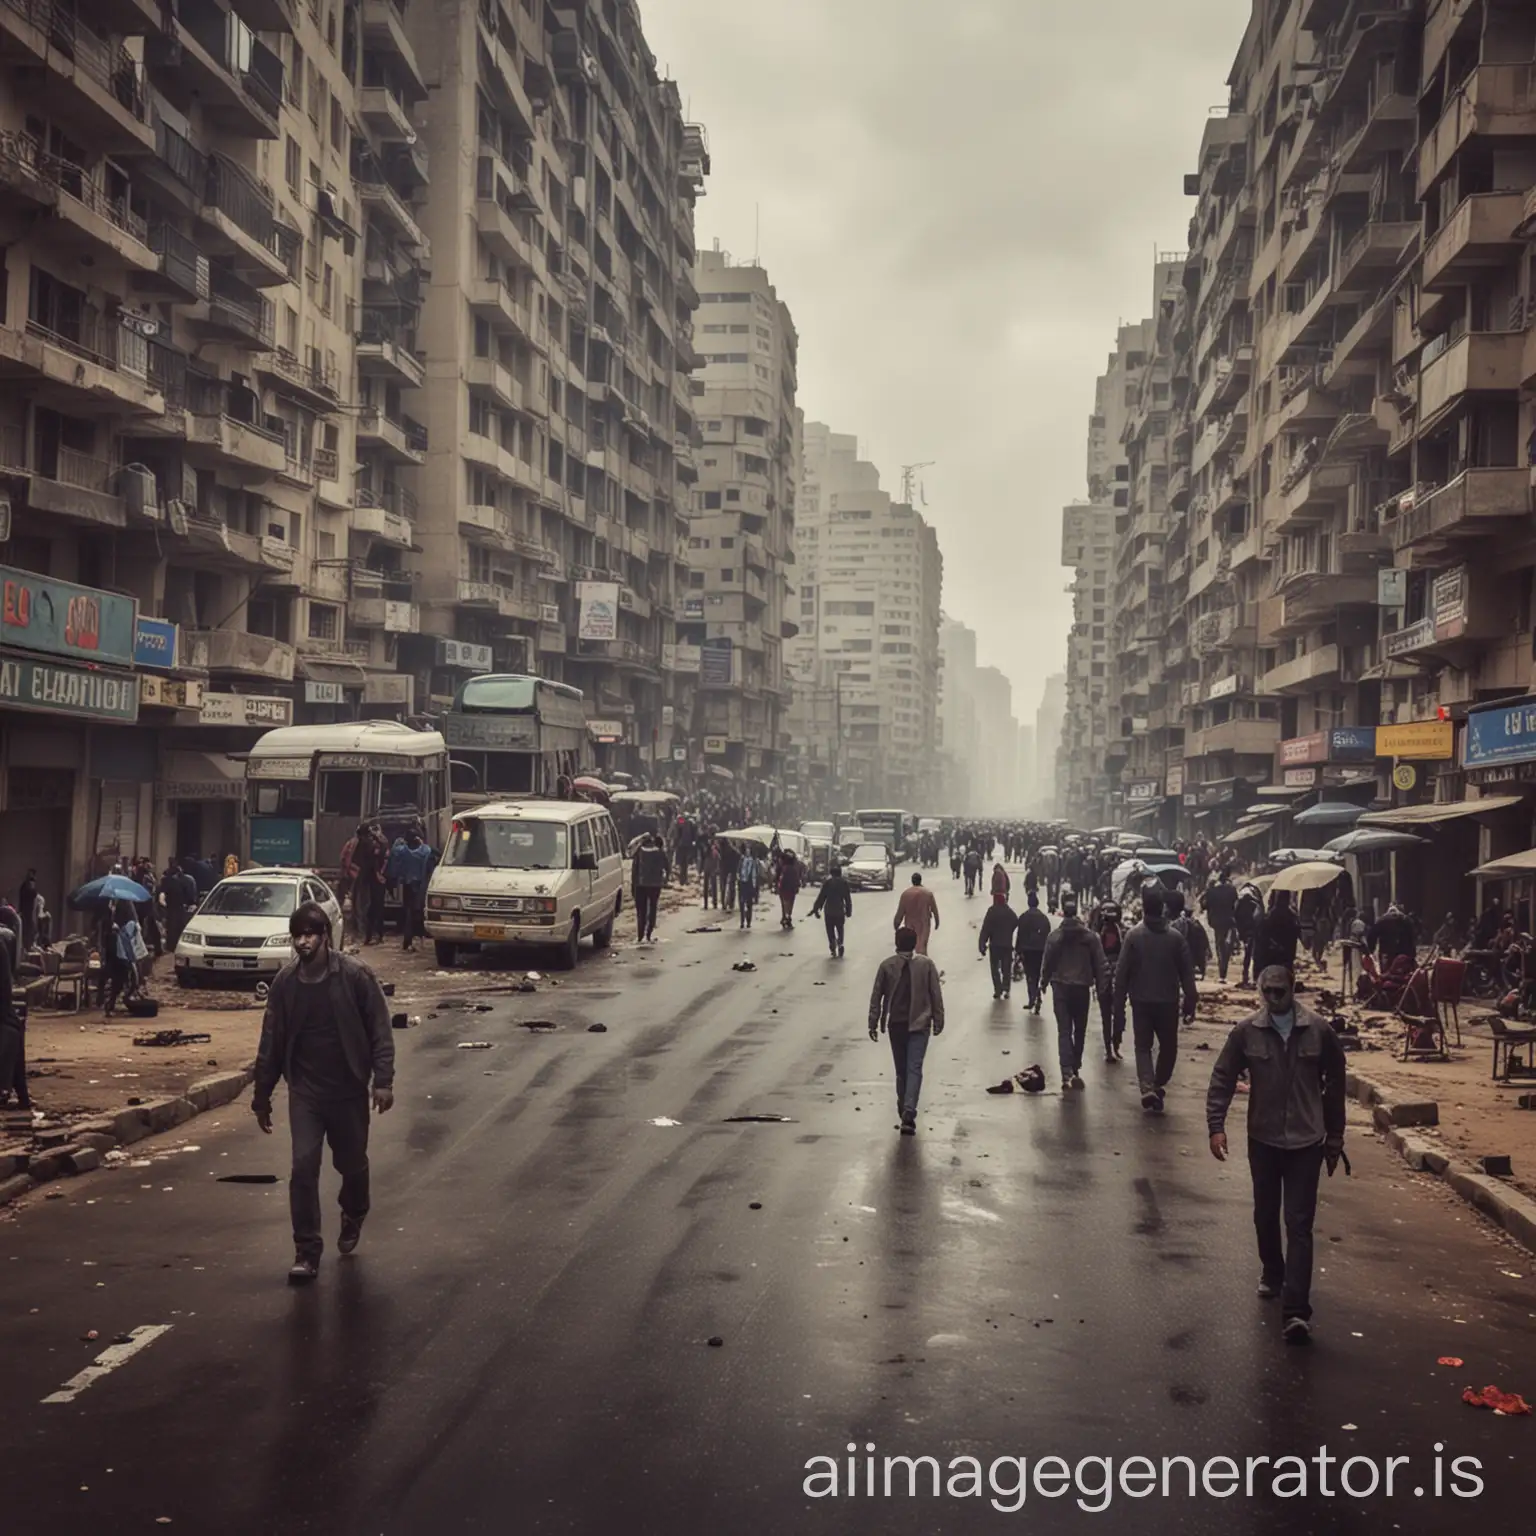 Zombie-Apocalypse-in-Cairo-Under-Grey-Cloudy-Weather